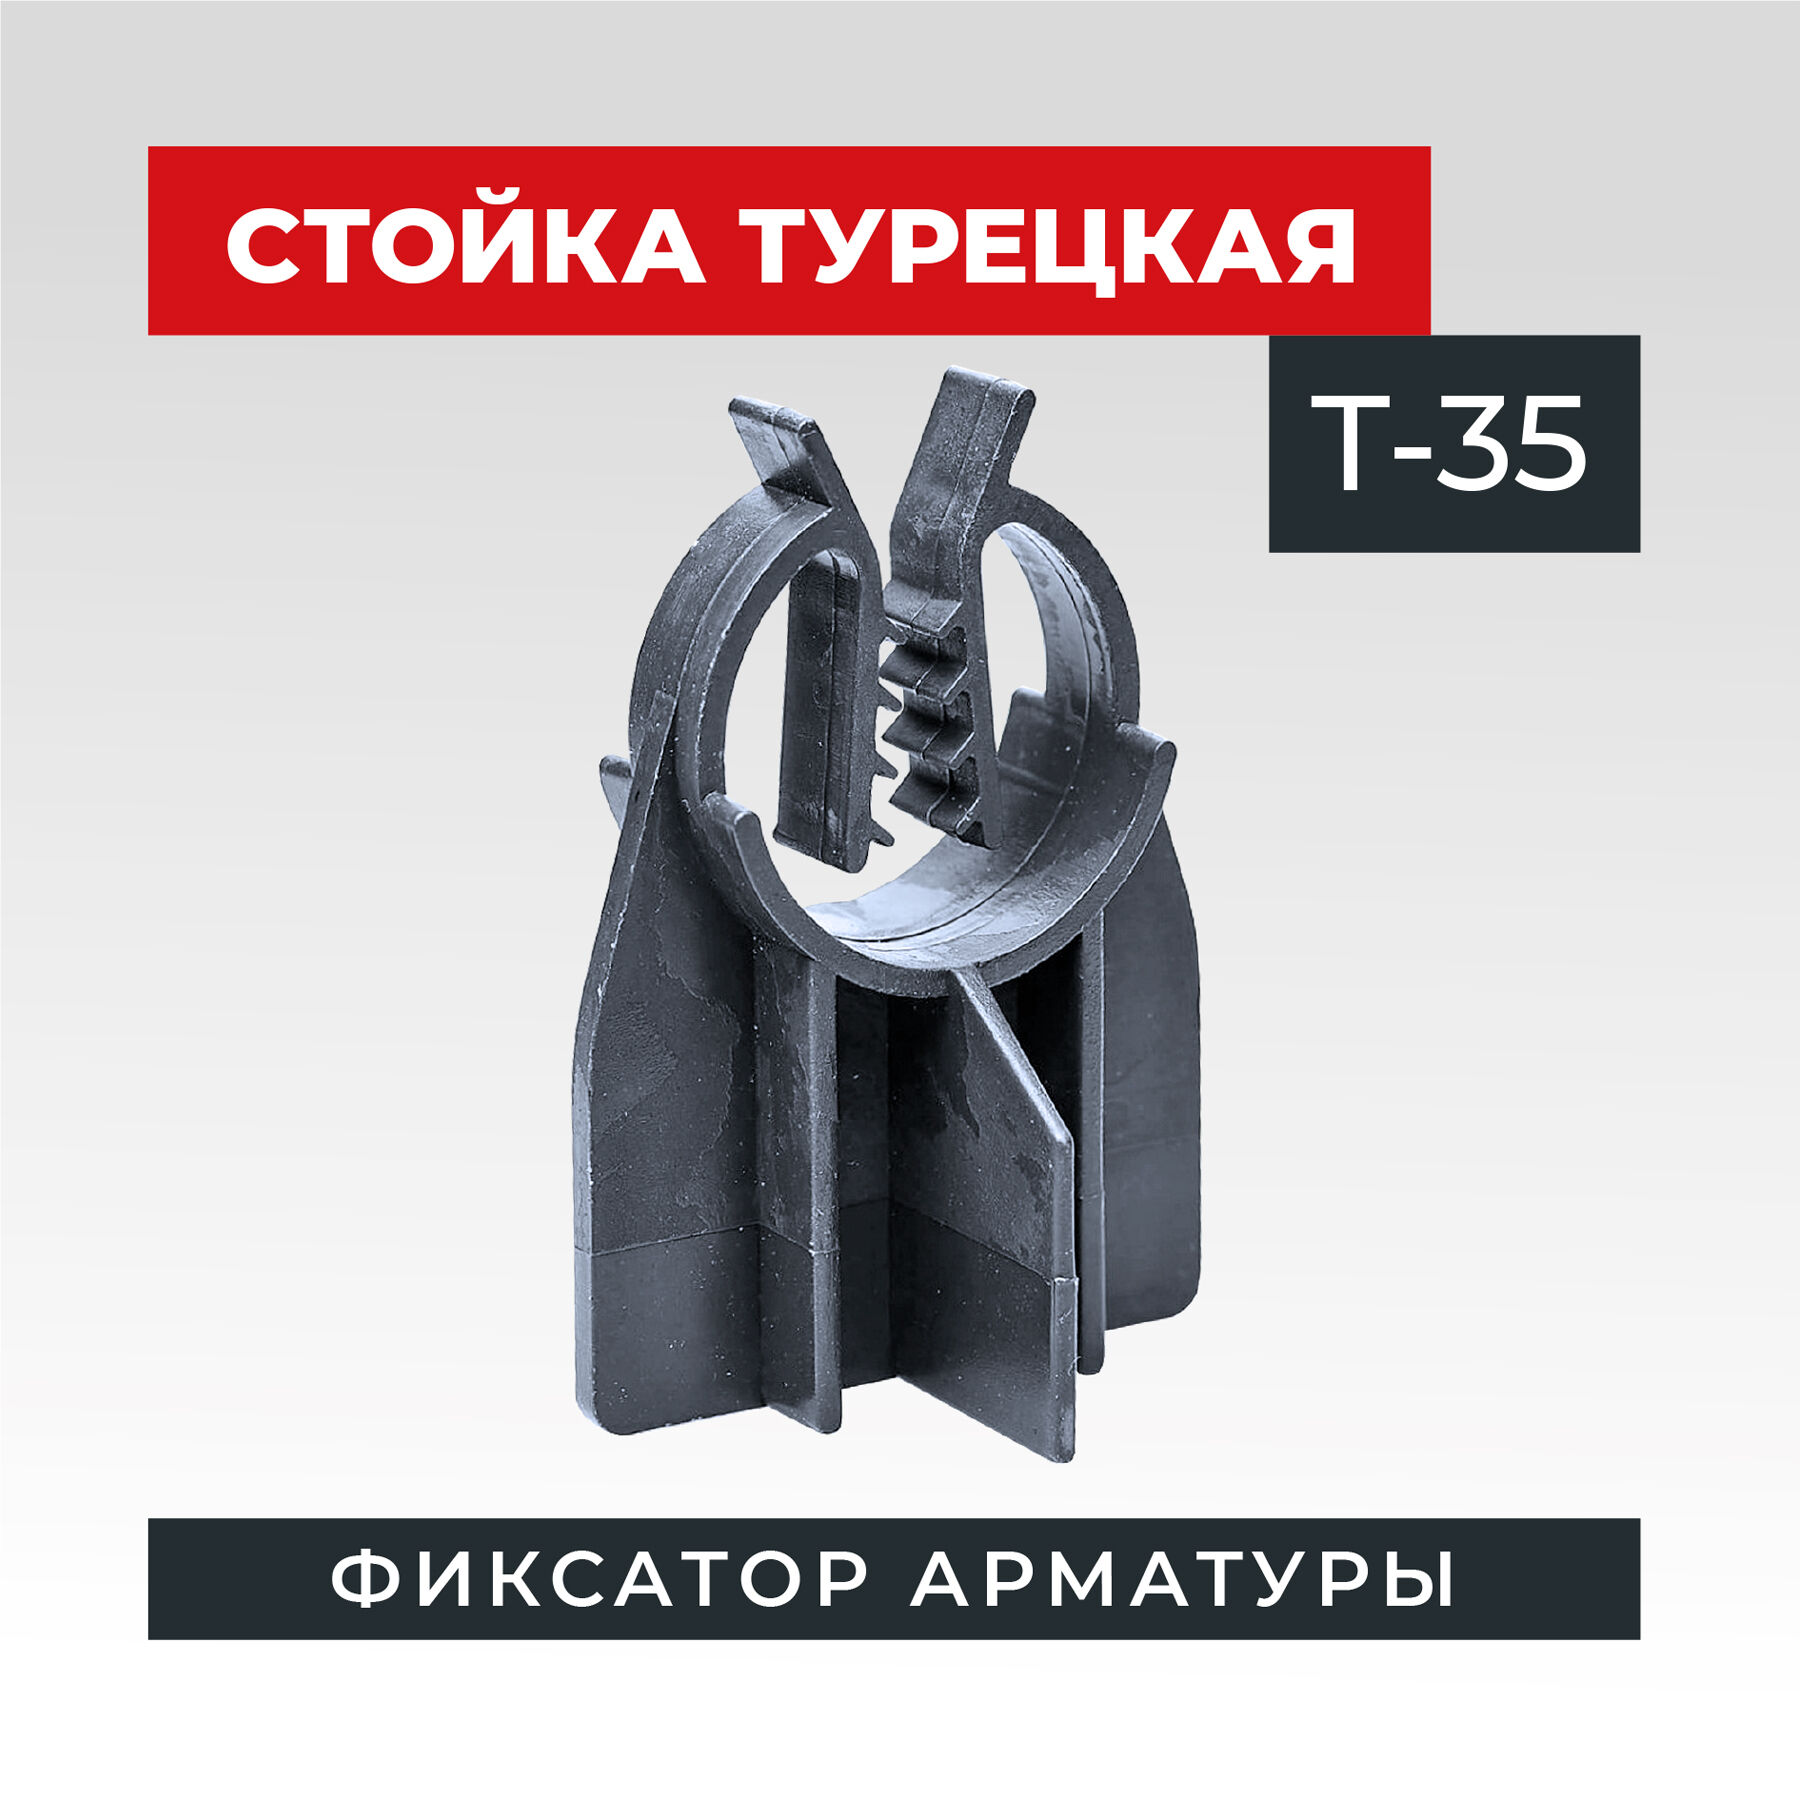 Фиксатор арматуры TeaM стойка турецкая Т-35 упаковка 500 шт. 1